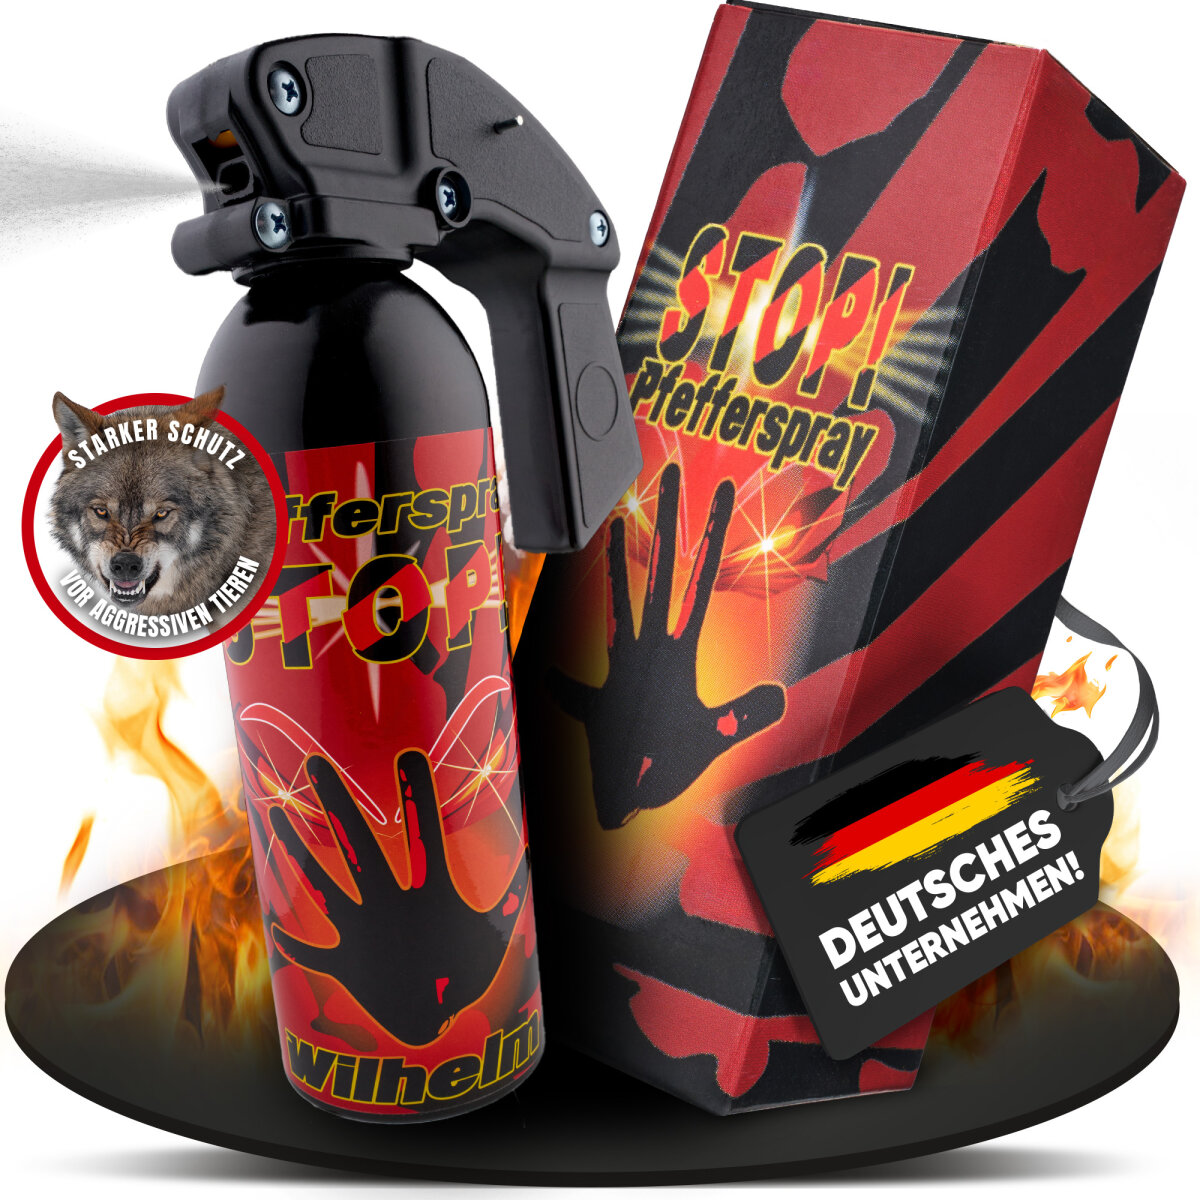 https://shop.nemt-gmbh.de/media/image/product/19280/lg/1-x-wilhelm-pfefferspray-470-ml-tierabwehr-selbstverteidigung-cs-ko-spray.jpg